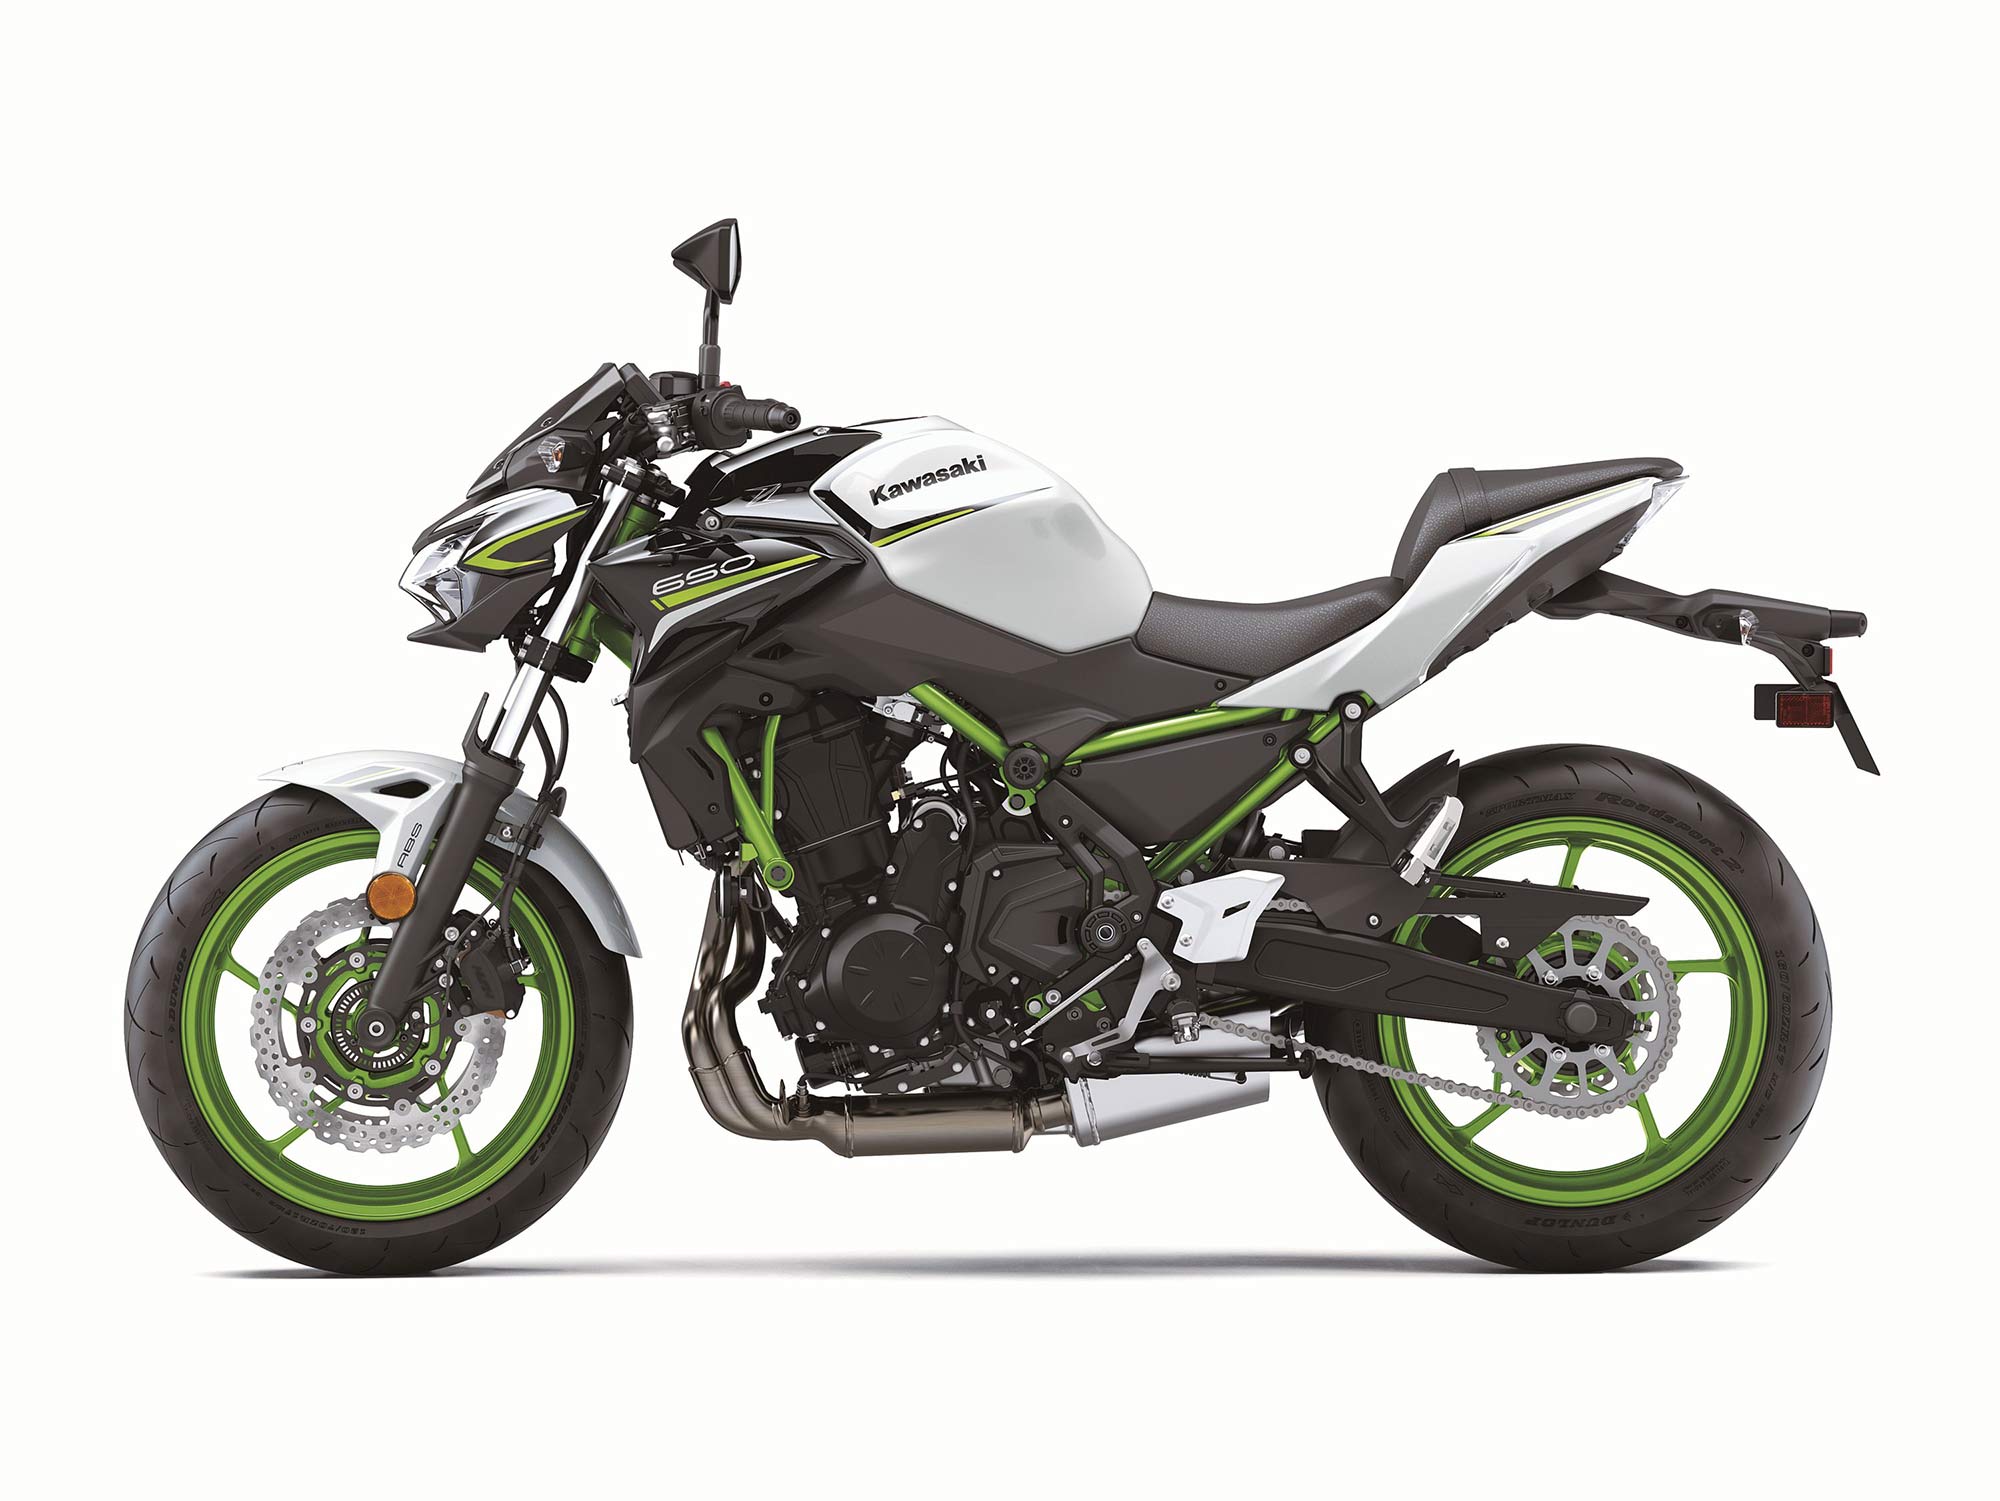 2021 Kawasaki Z650 Specs, | Cycle World